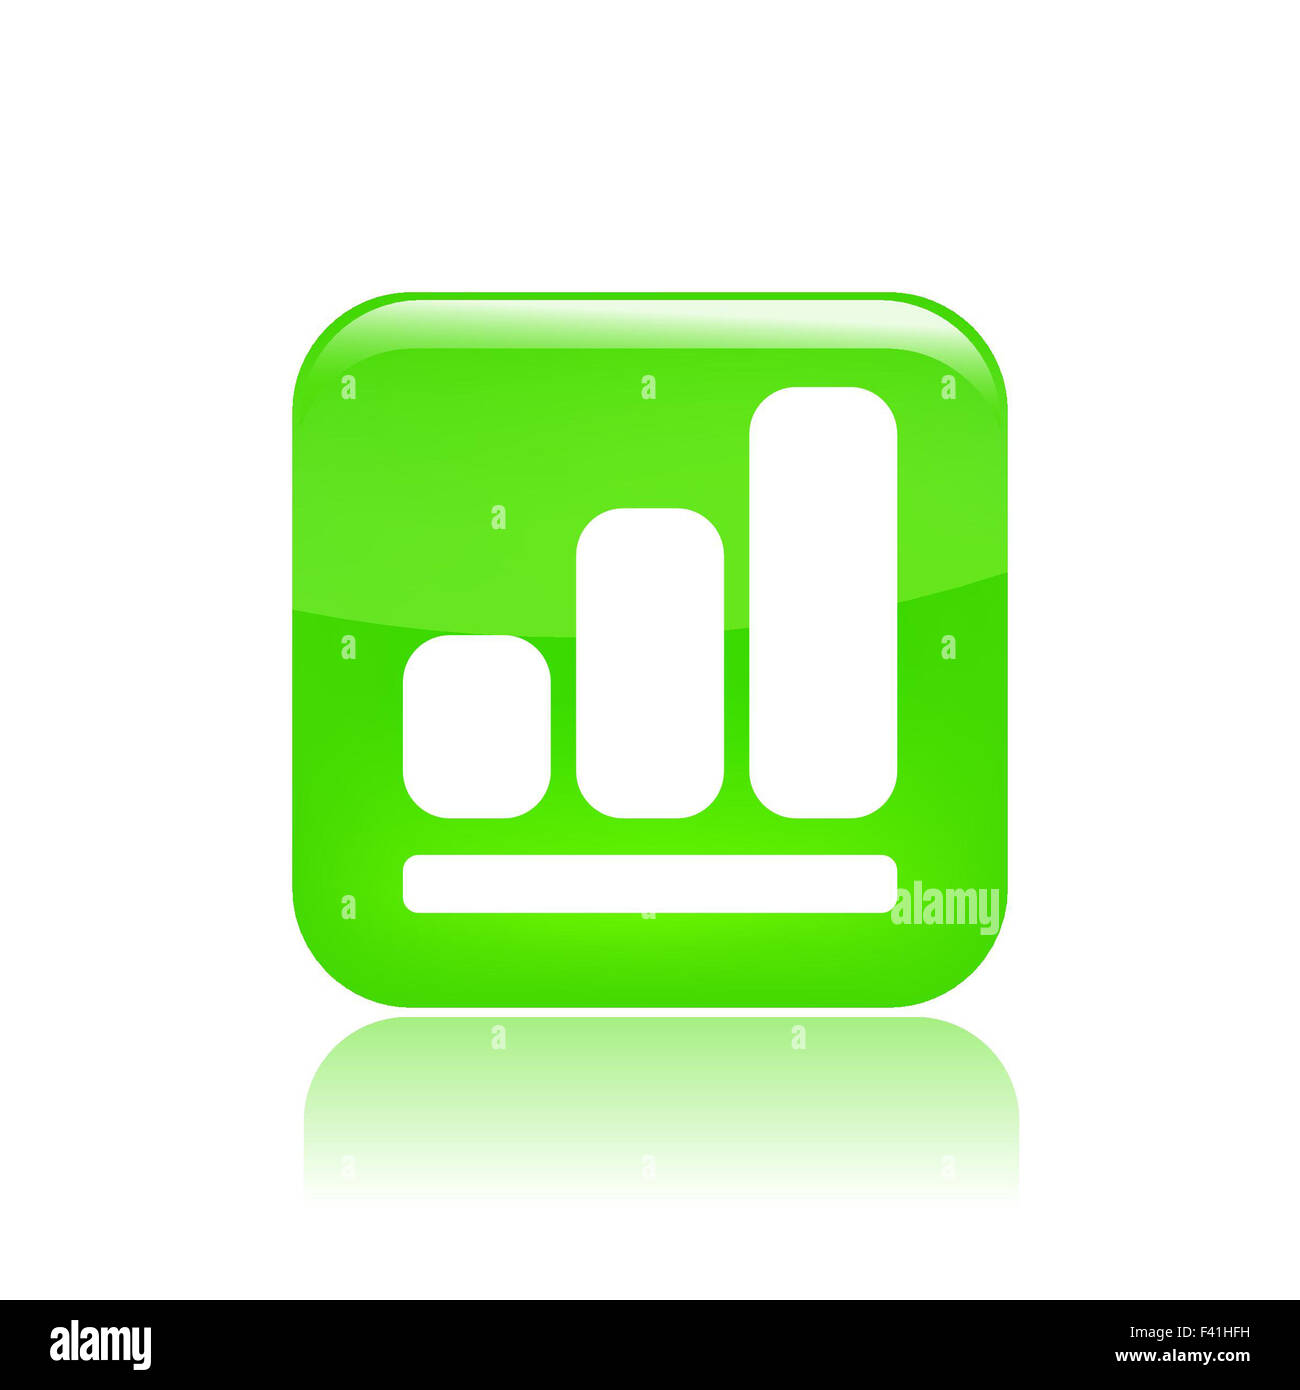 Vector illustration de l'icône de niveau Banque D'Images